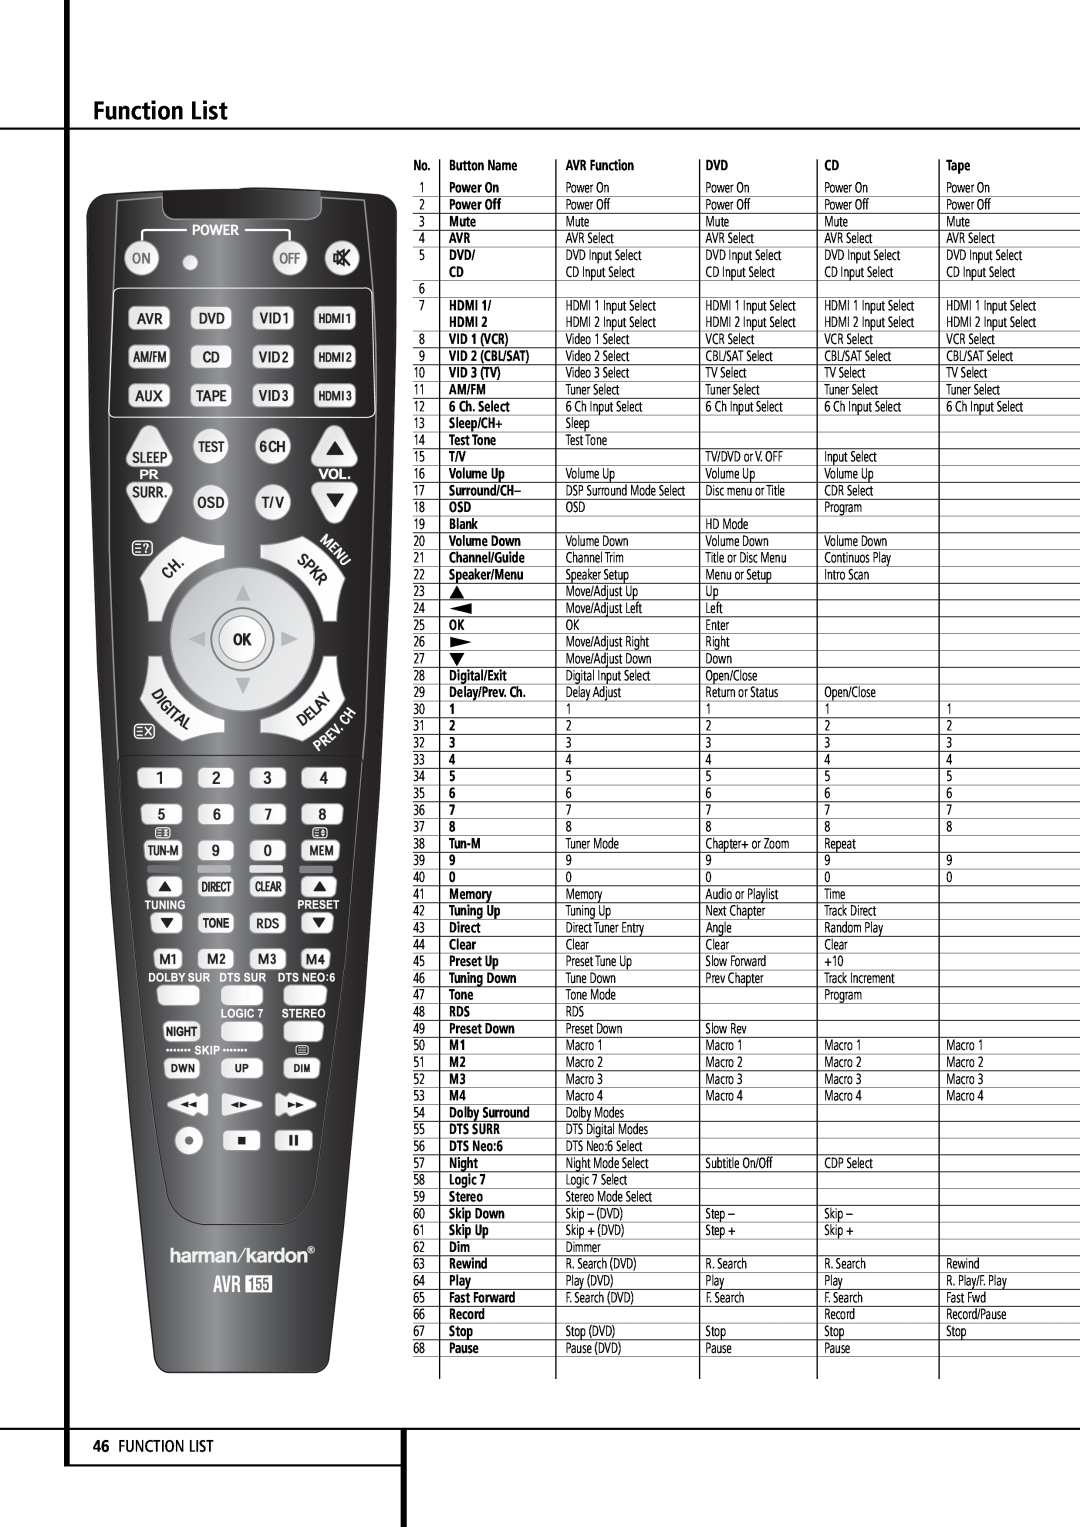 Harman-Kardon AVR 155 Function List, Button Name, AVR Function, Tape, Power On, Power Off, Mute, Hdmi, VID 1 VCR, VID 3 TV 